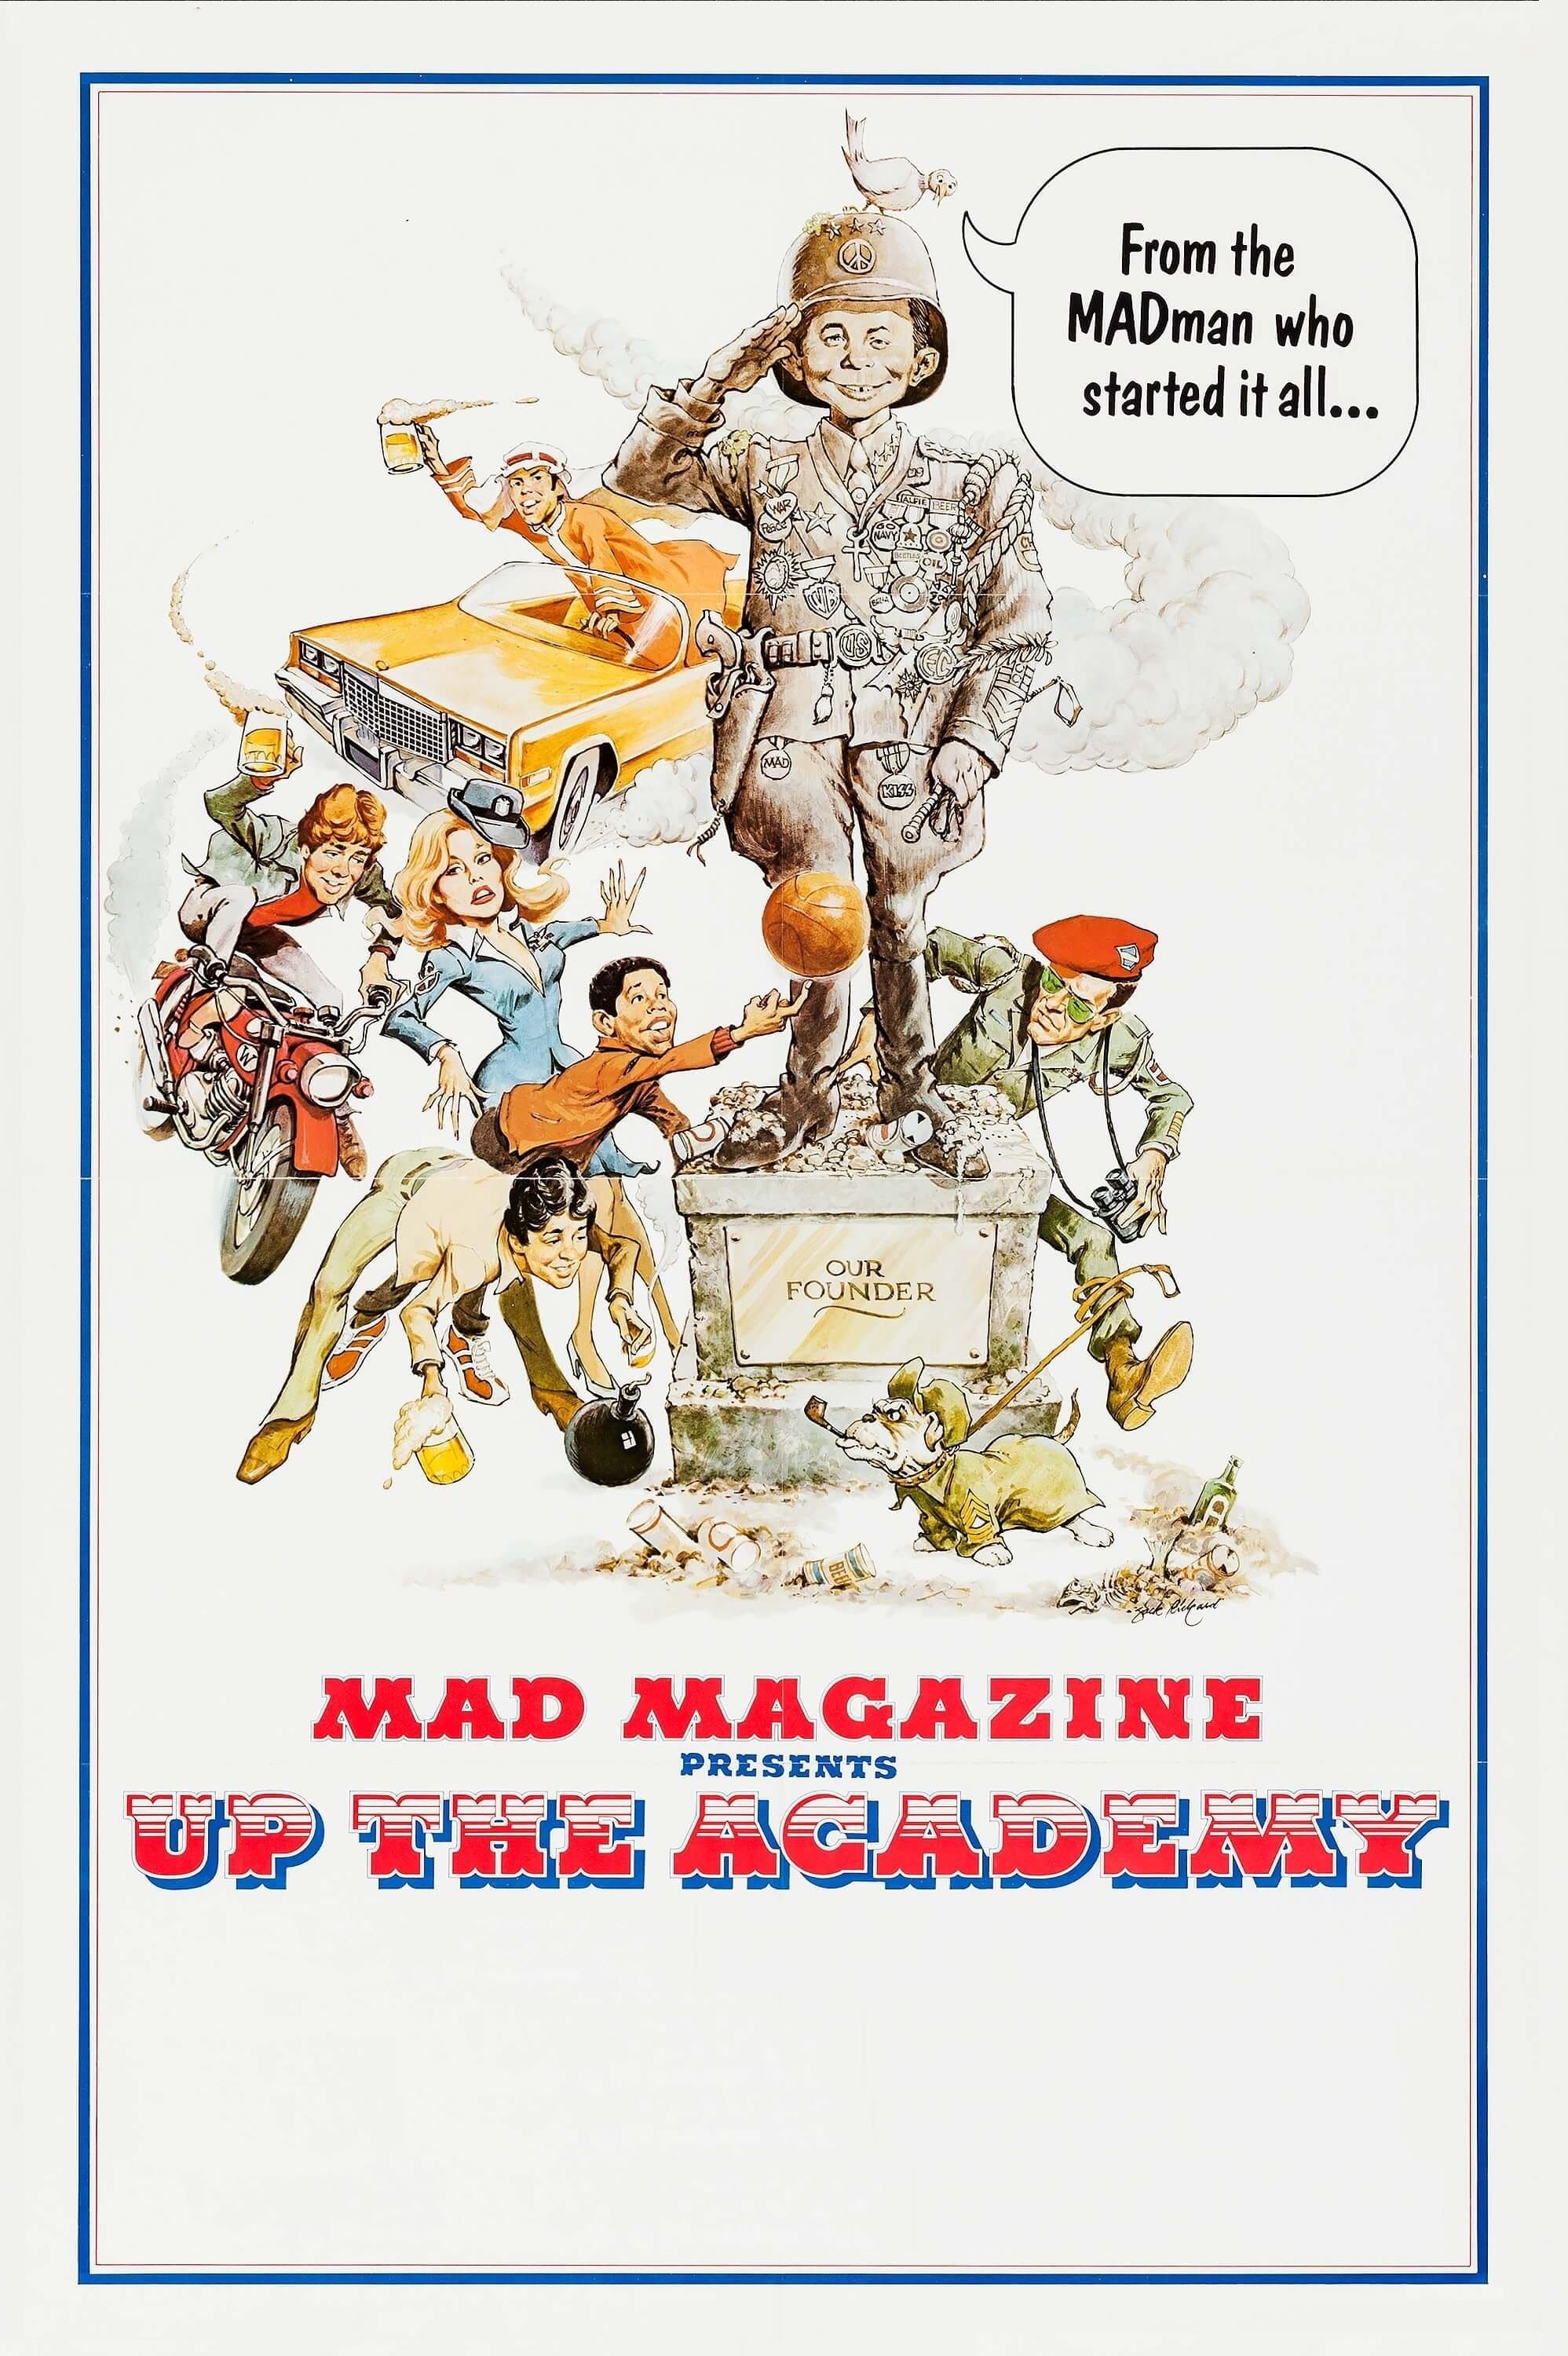 Die Kadeppen Akademie (1980)